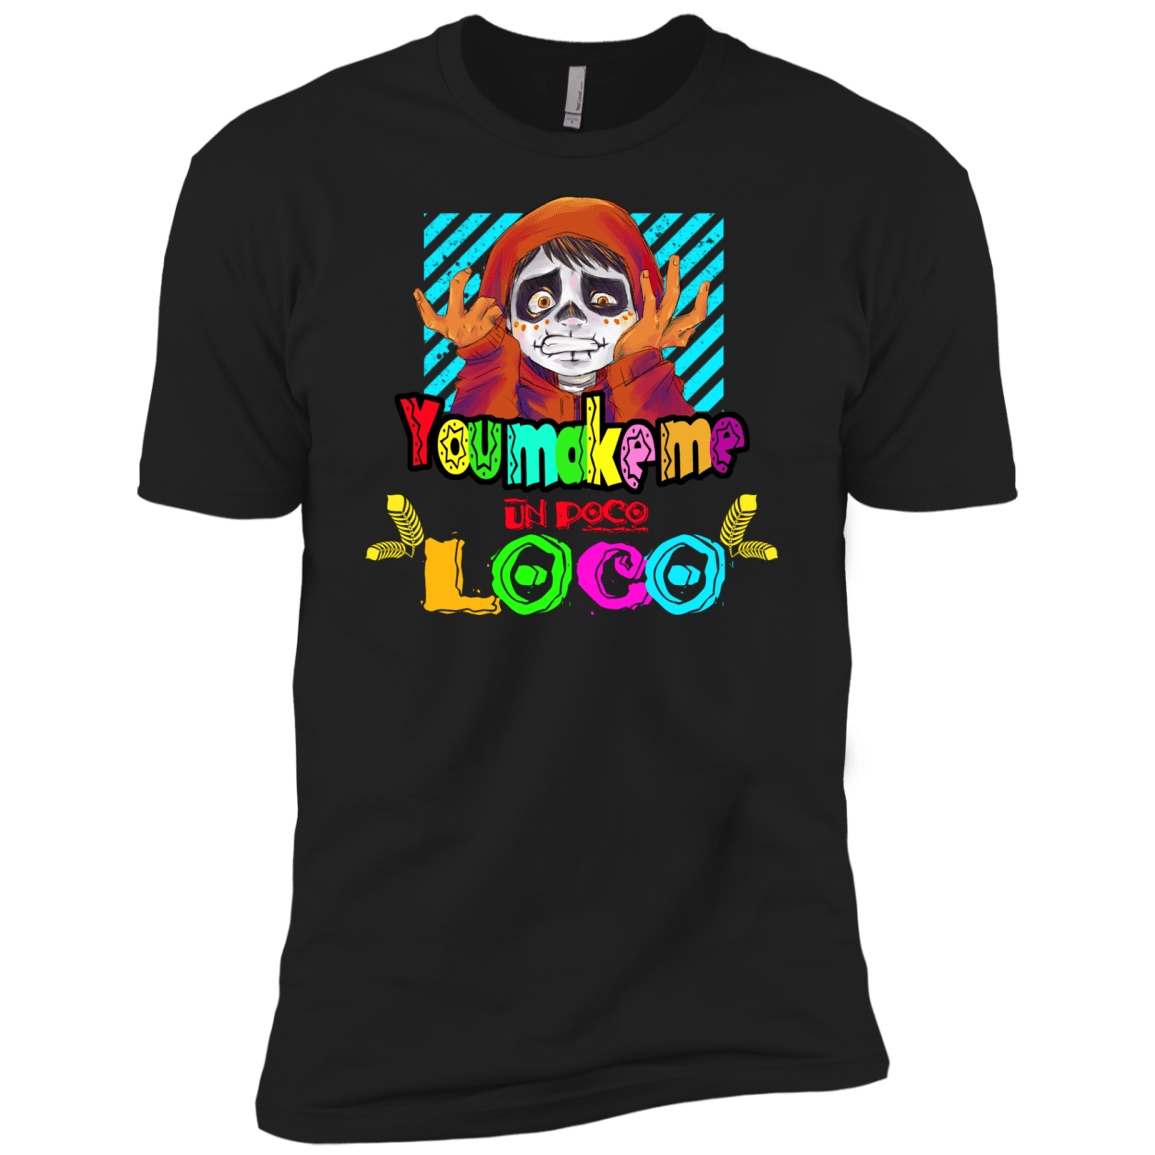 You Make Me Un Poco Loco Men's Premium T-Shirt